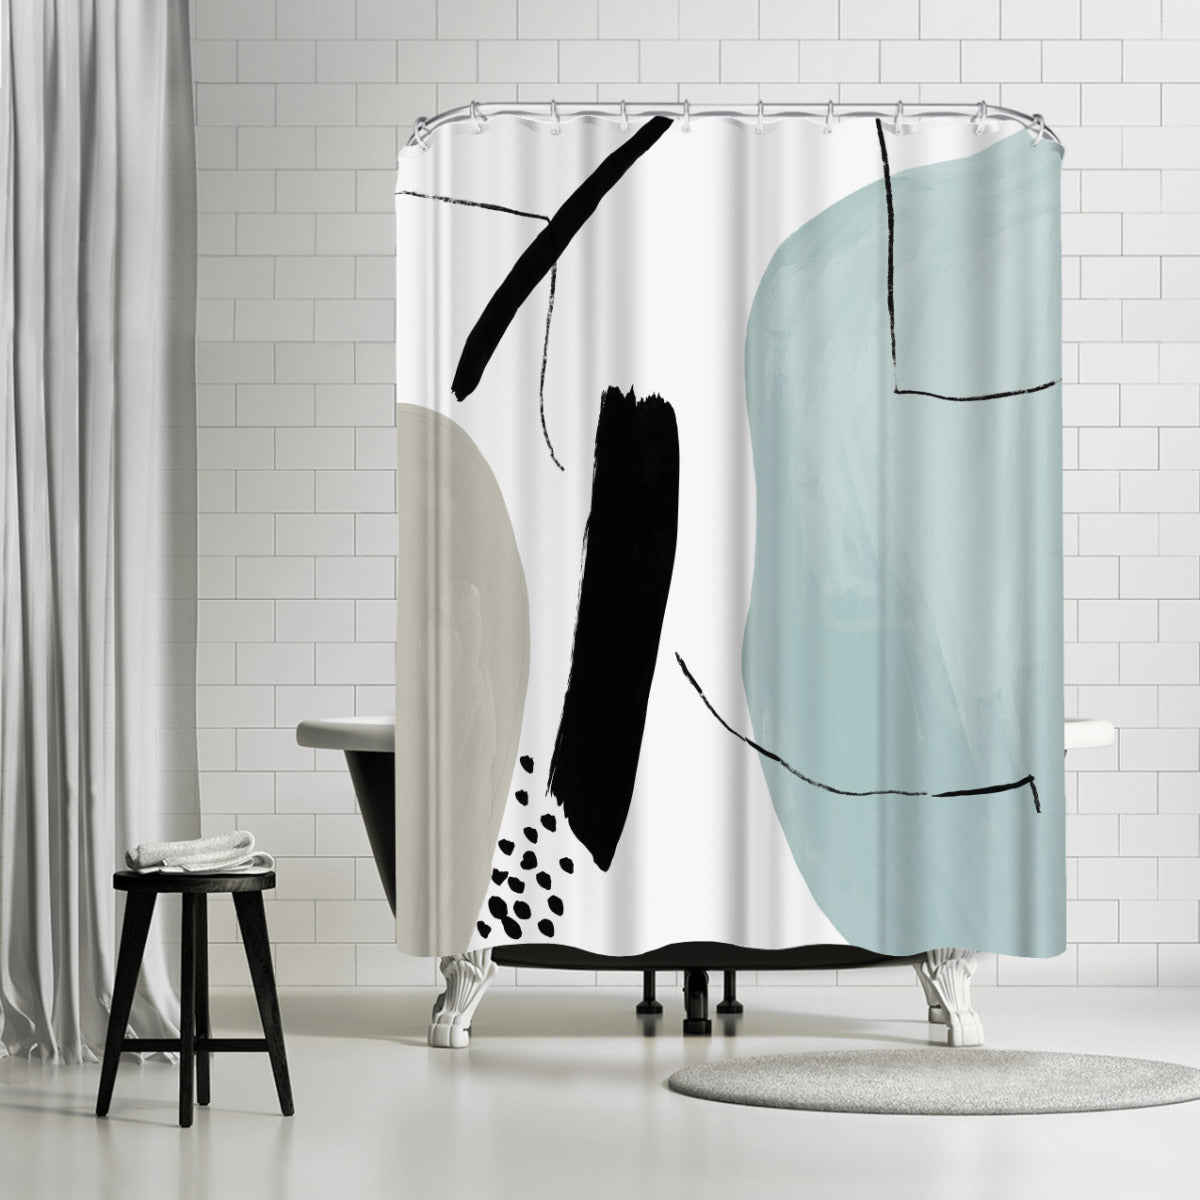 Integral Ii by Pi Creative Art - Shower Curtain, Shower Curtain, 74" X 71"